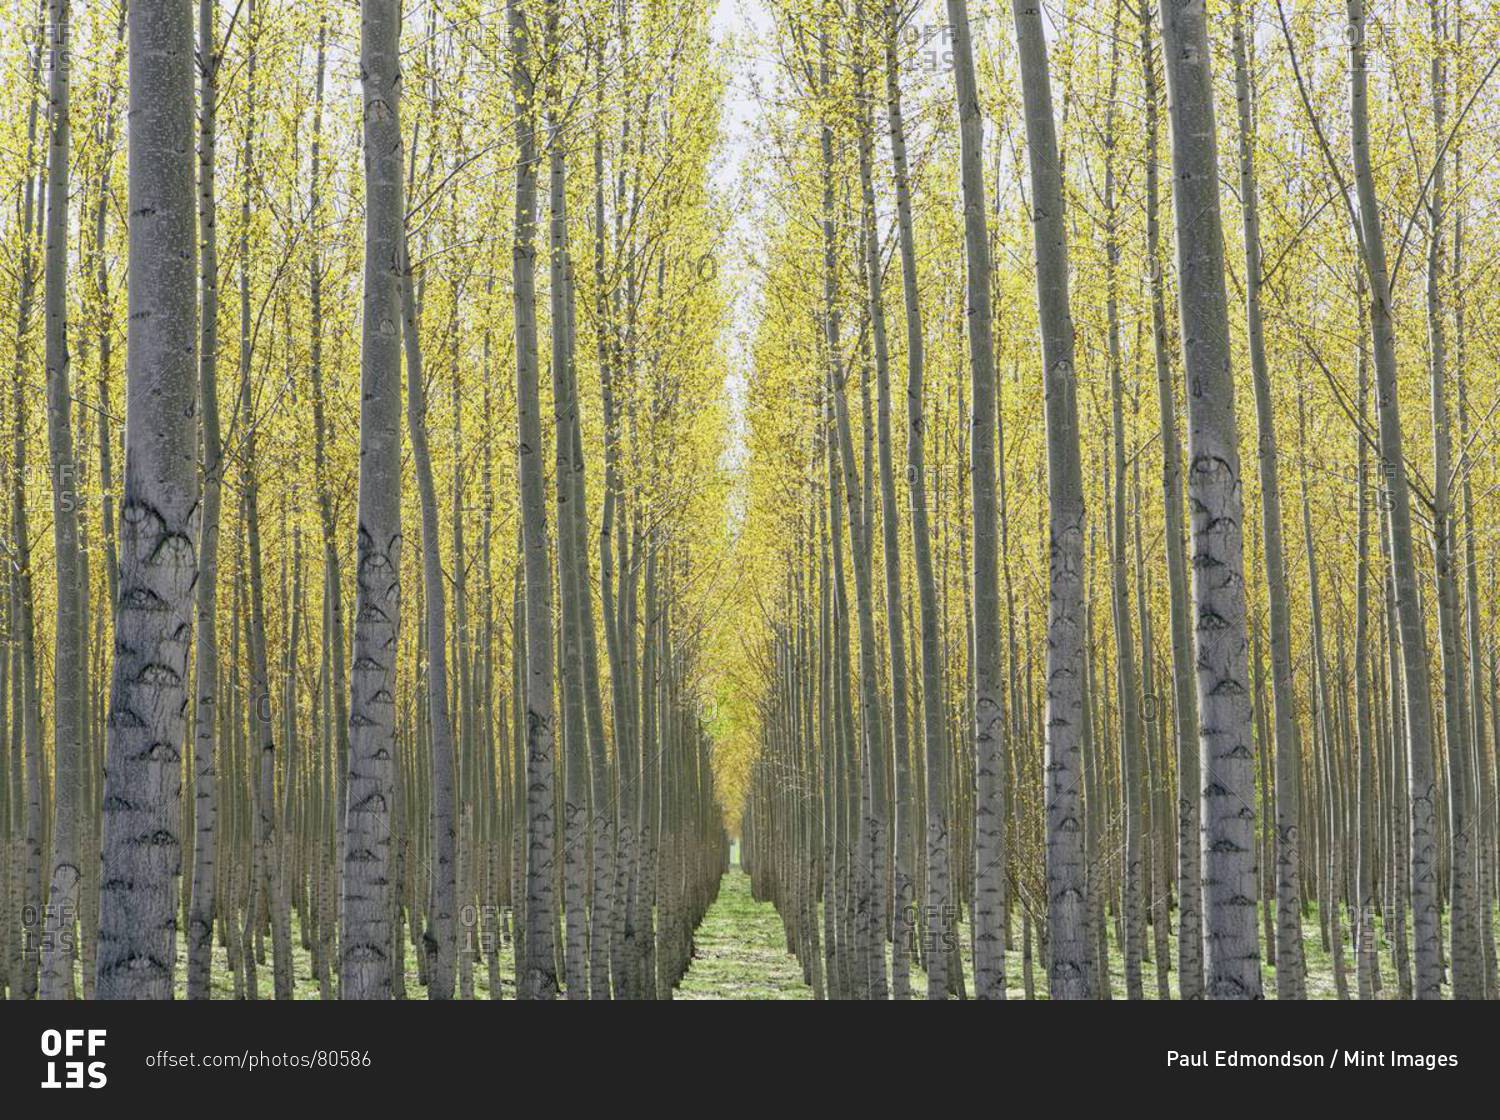 Rows of commercially grown poplar trees on a tree farm, near Pendleton, Oregon.